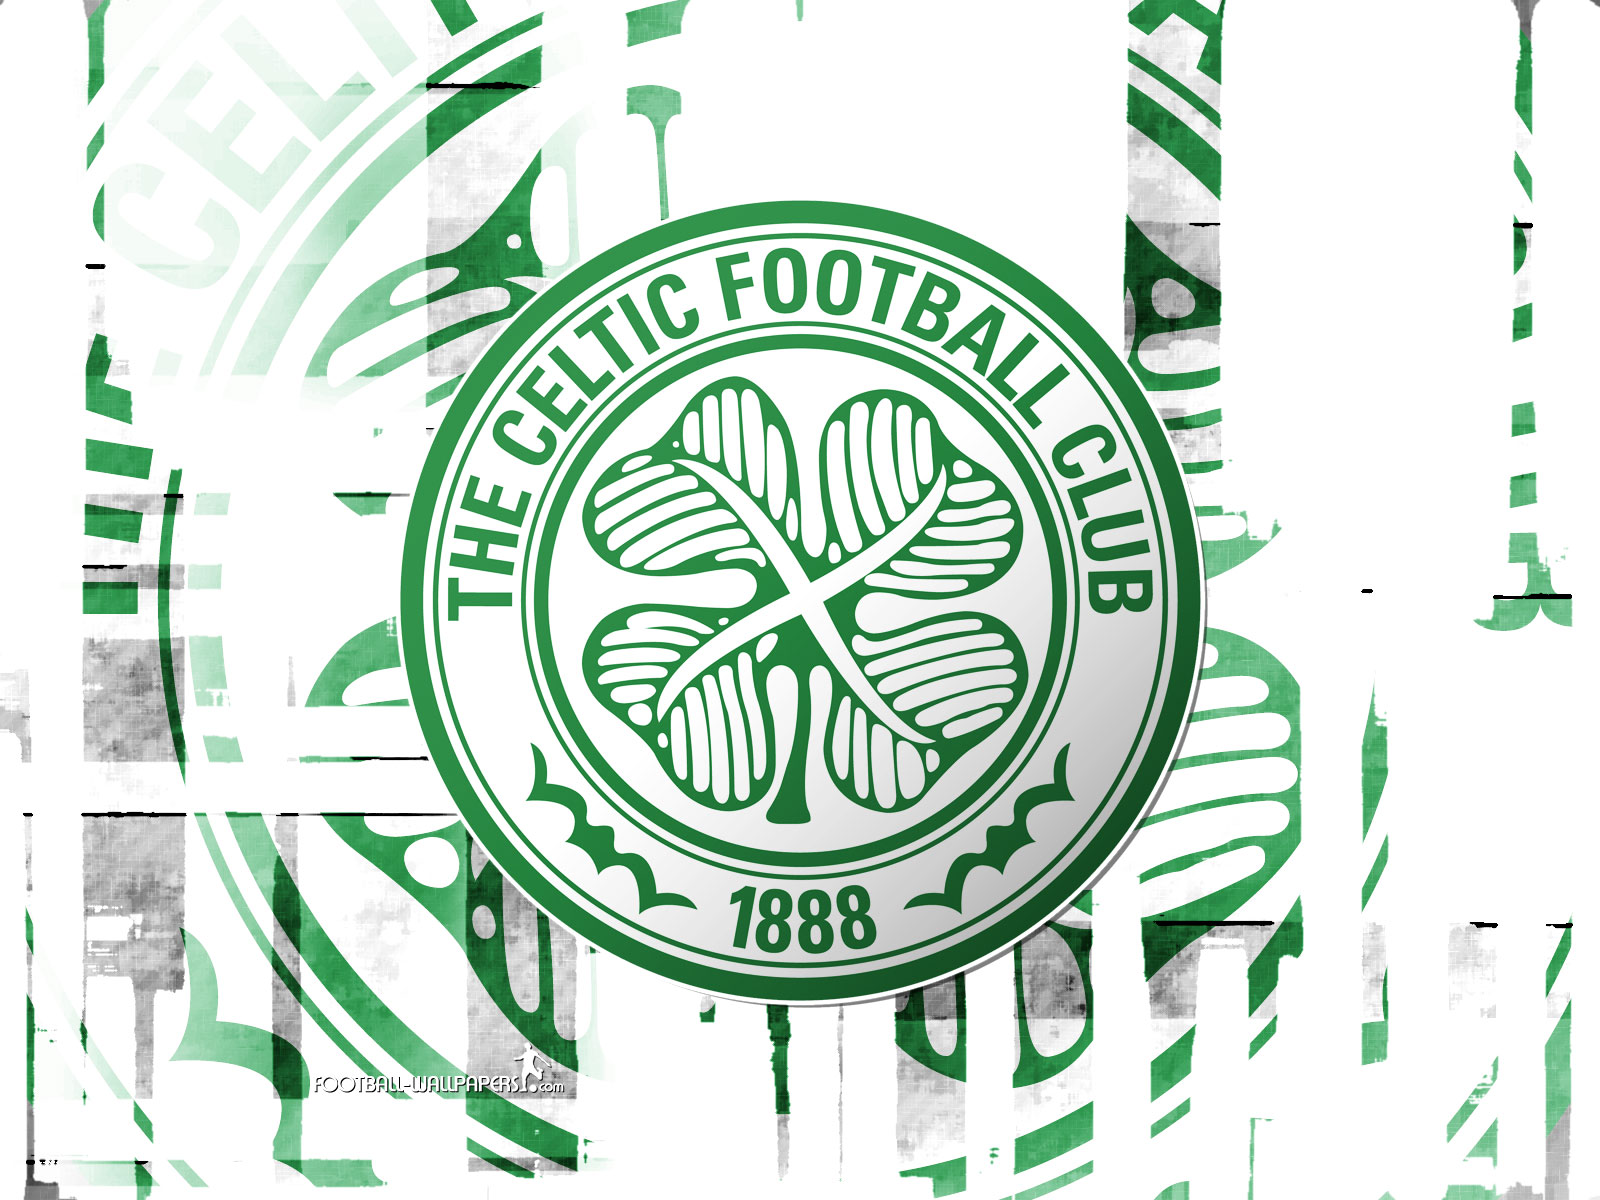 celtic football club